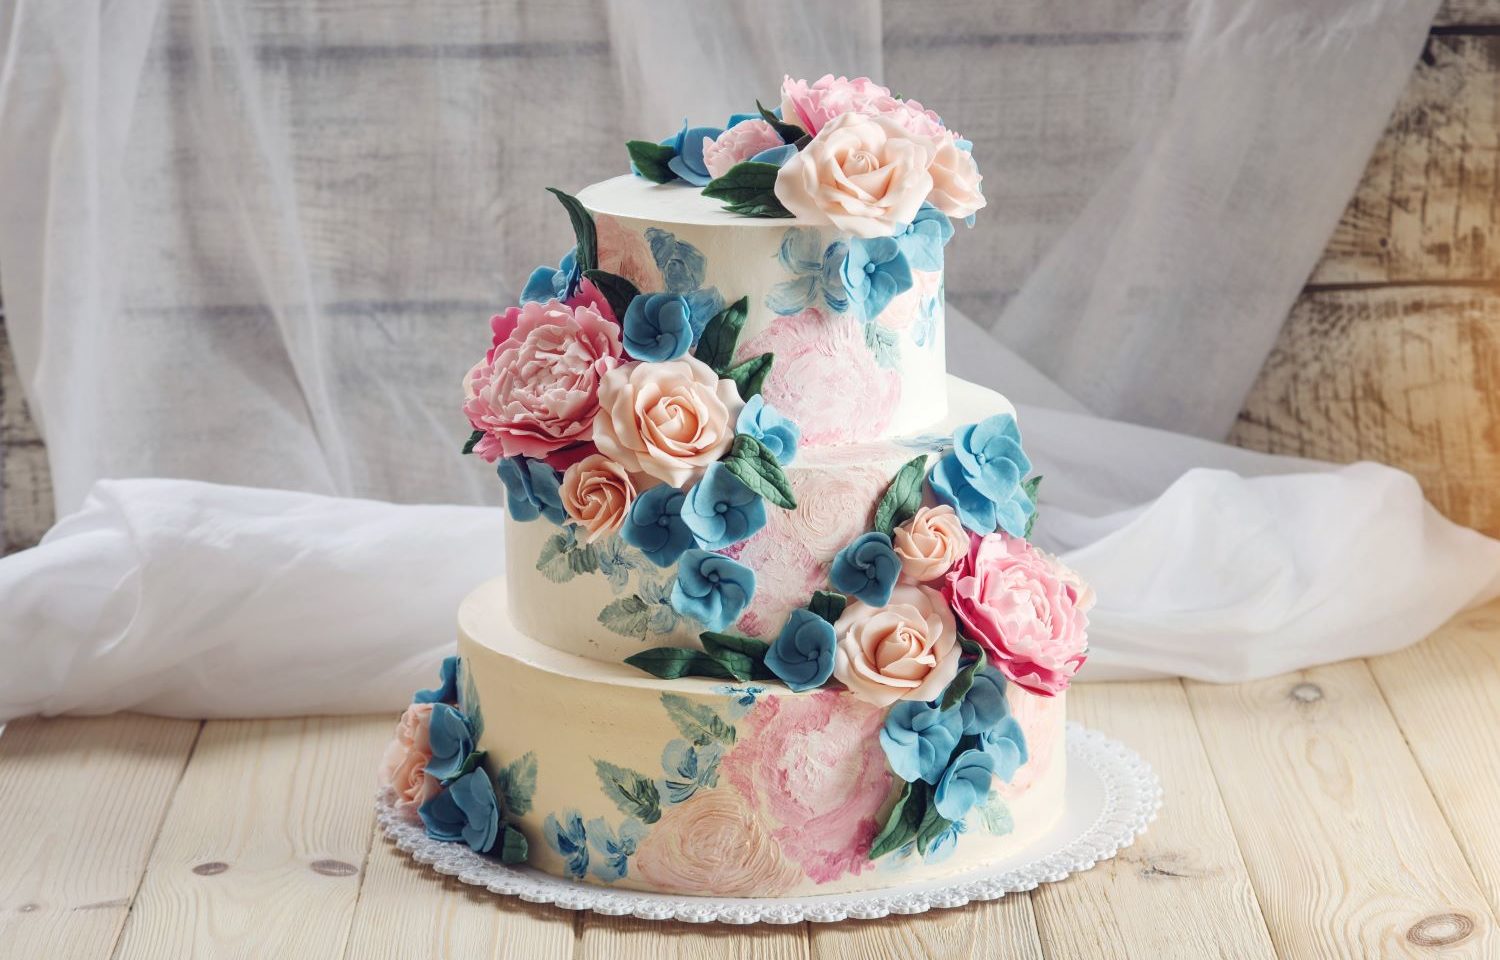 How to set up a Wedding Cake| Stacking Wedding Cake| Wedding Cake set up| Cake  Trends 2020 - YouTube